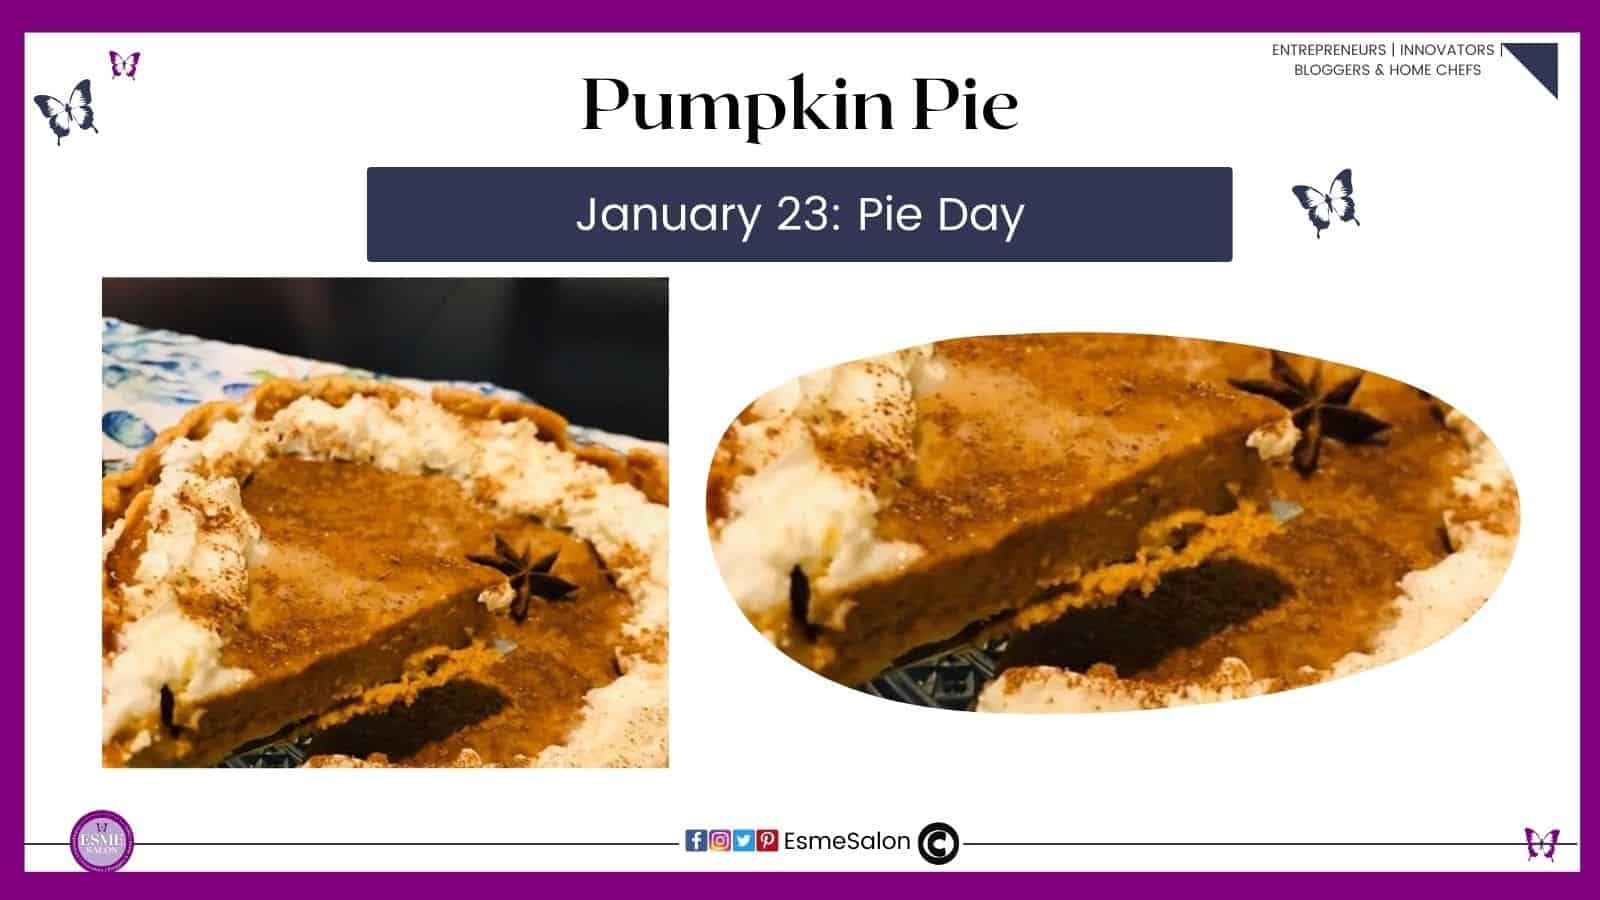 an image of a Pumpkin Pie for Thanksgiving